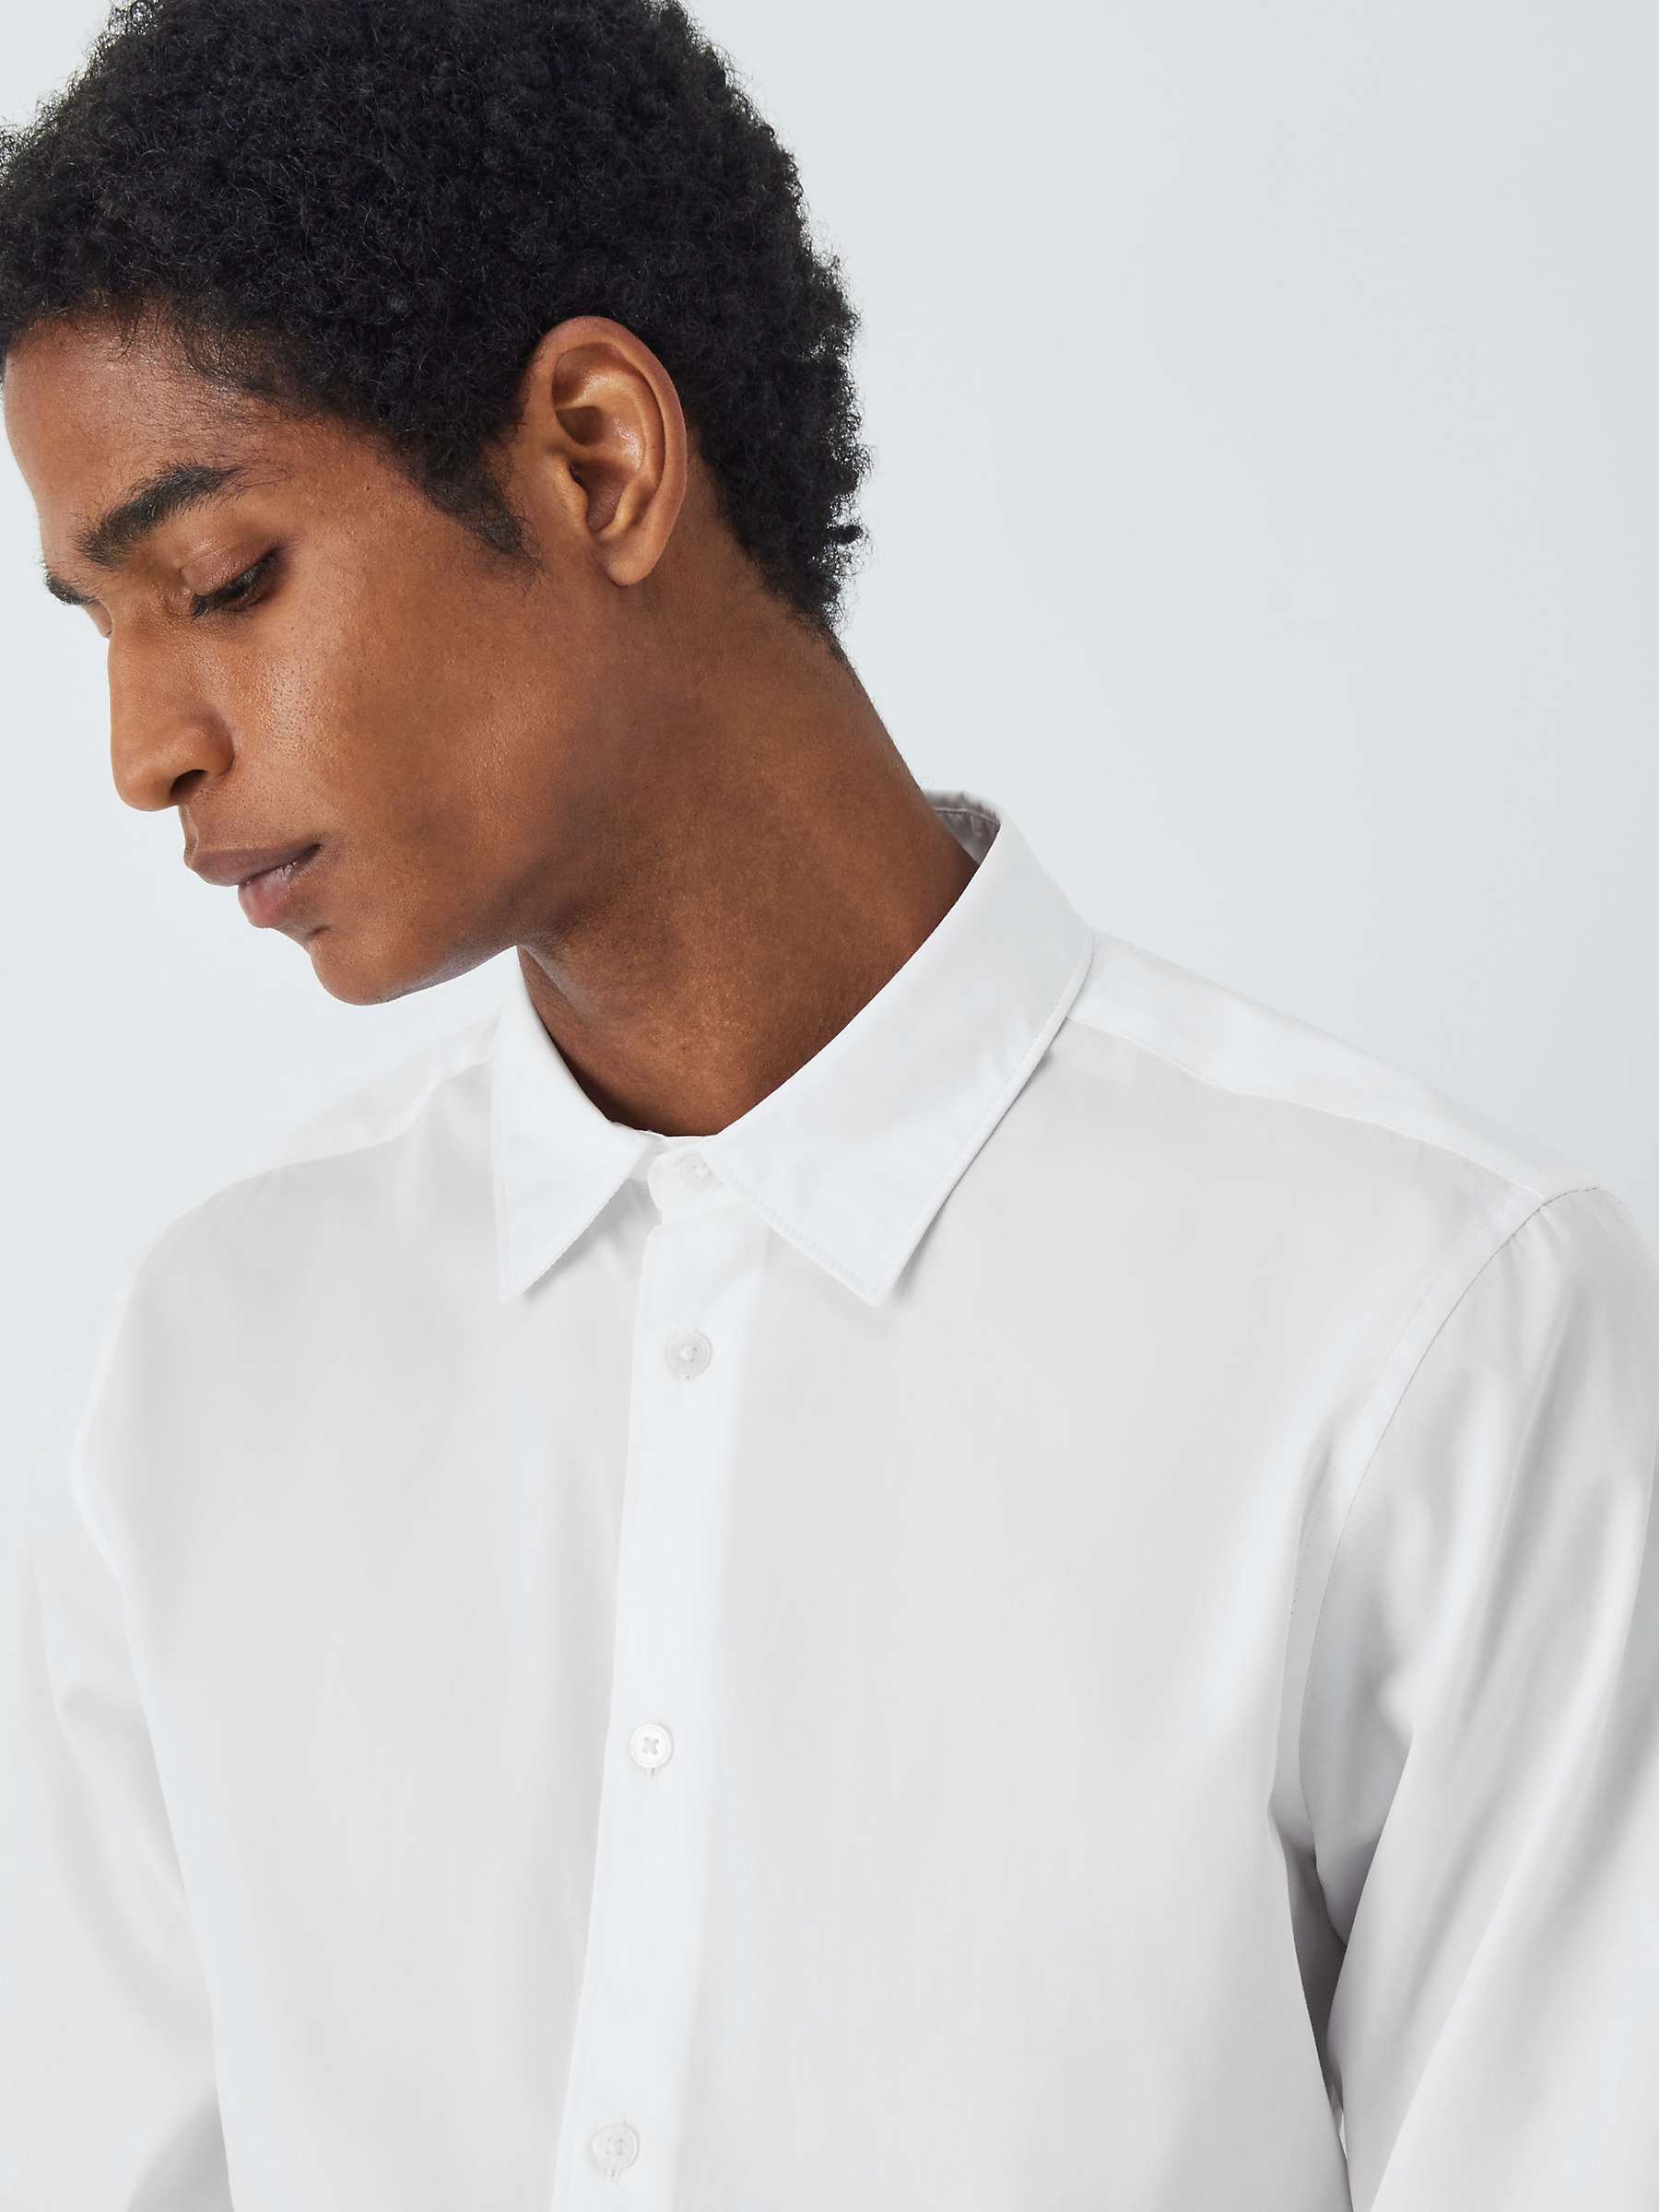 Buy Kin Cotton Poplin Shirt, Bright White Online at johnlewis.com